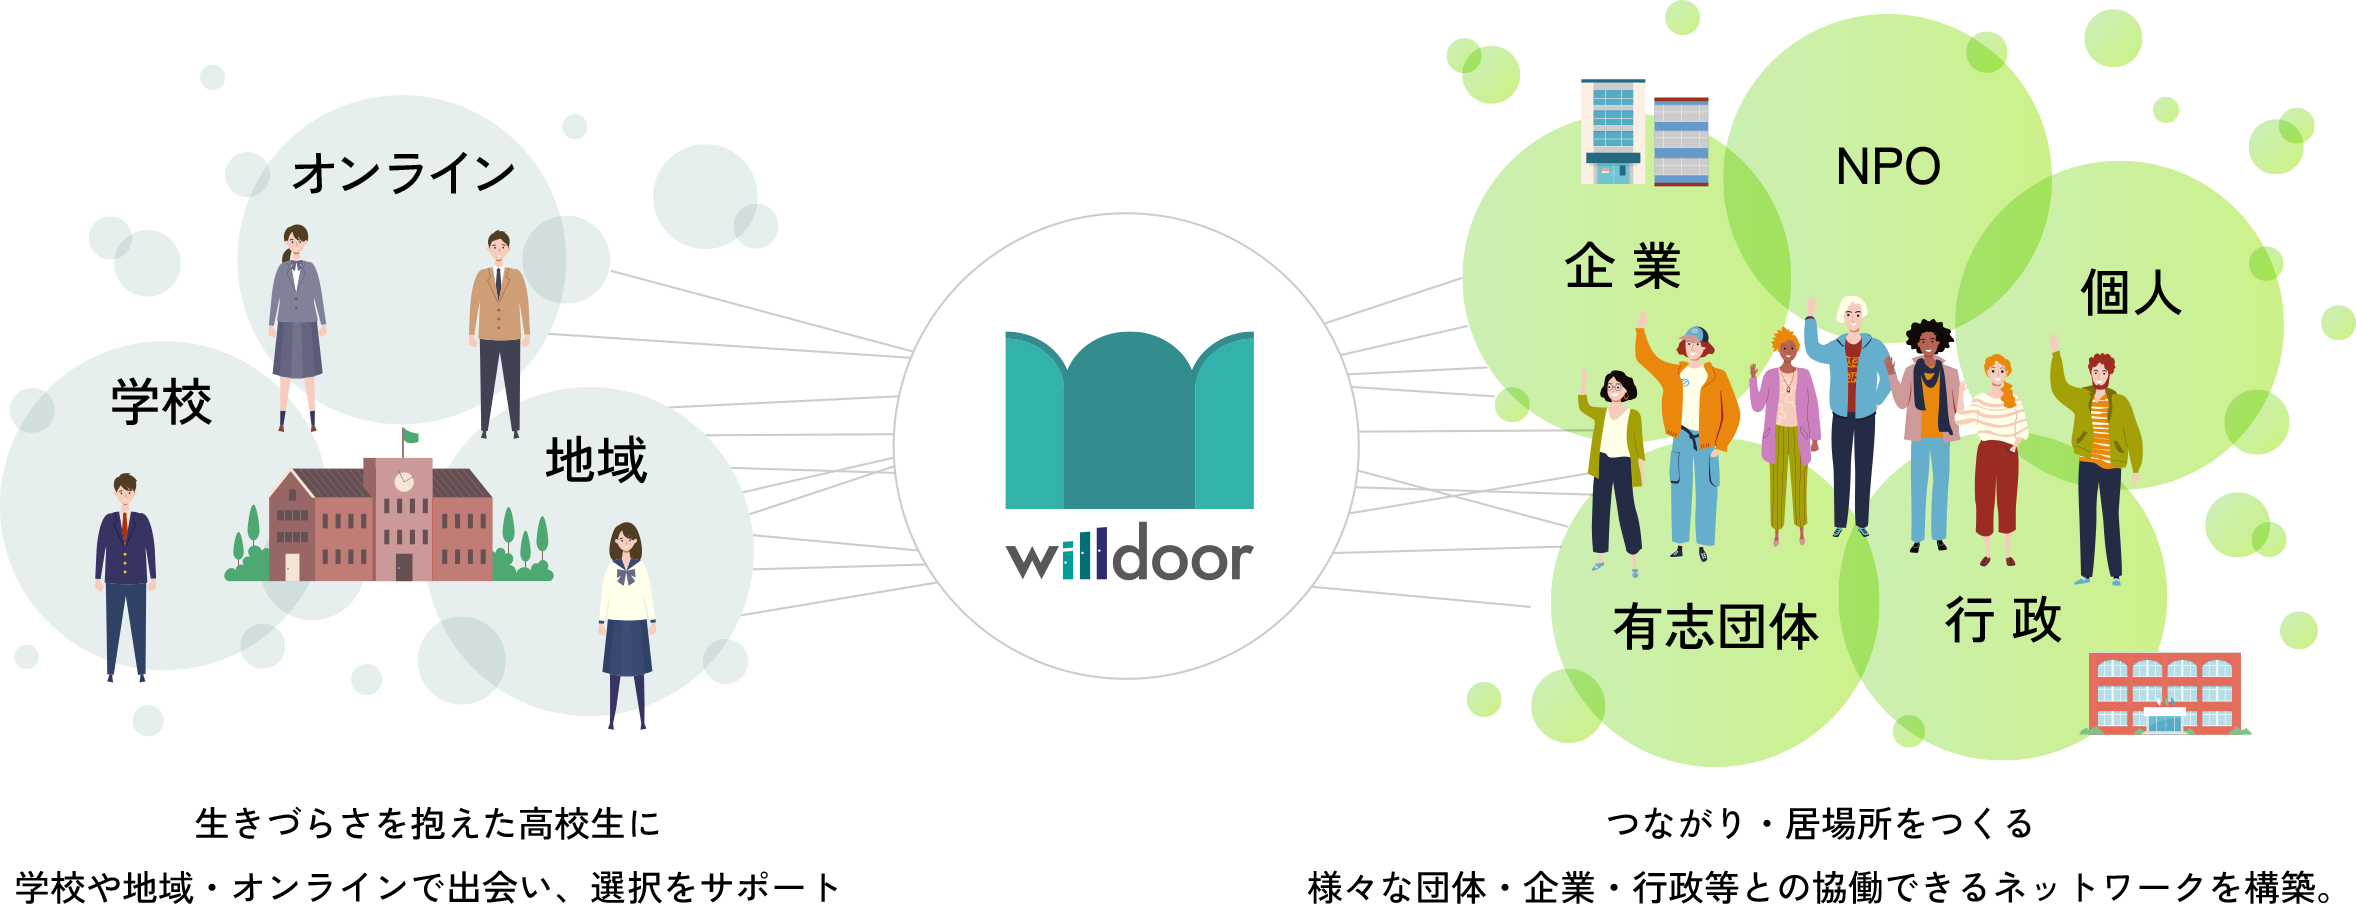 willdoor 生きづらさを抱えた高校生に学校や地域・オンラインで出会い、選択をサポート／つながり・居場所をつくる様々な団体・企業・行政等と協働できるネットワークをを構築